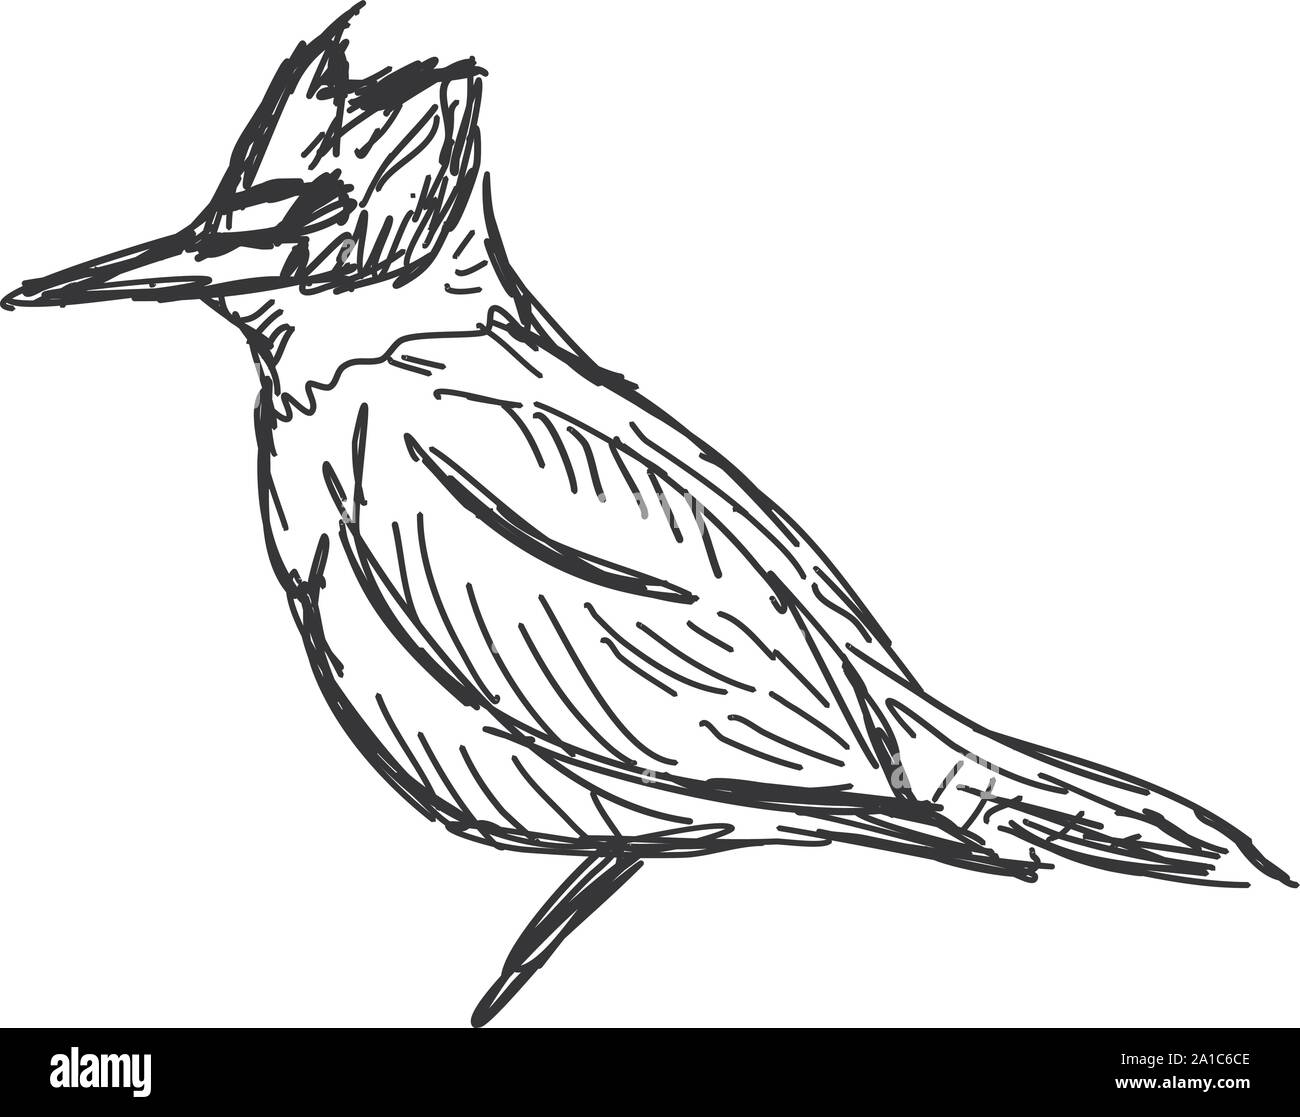 13 Easy Bird Drawings to Draw  Bird drawings Simple bird drawing Easy  bird